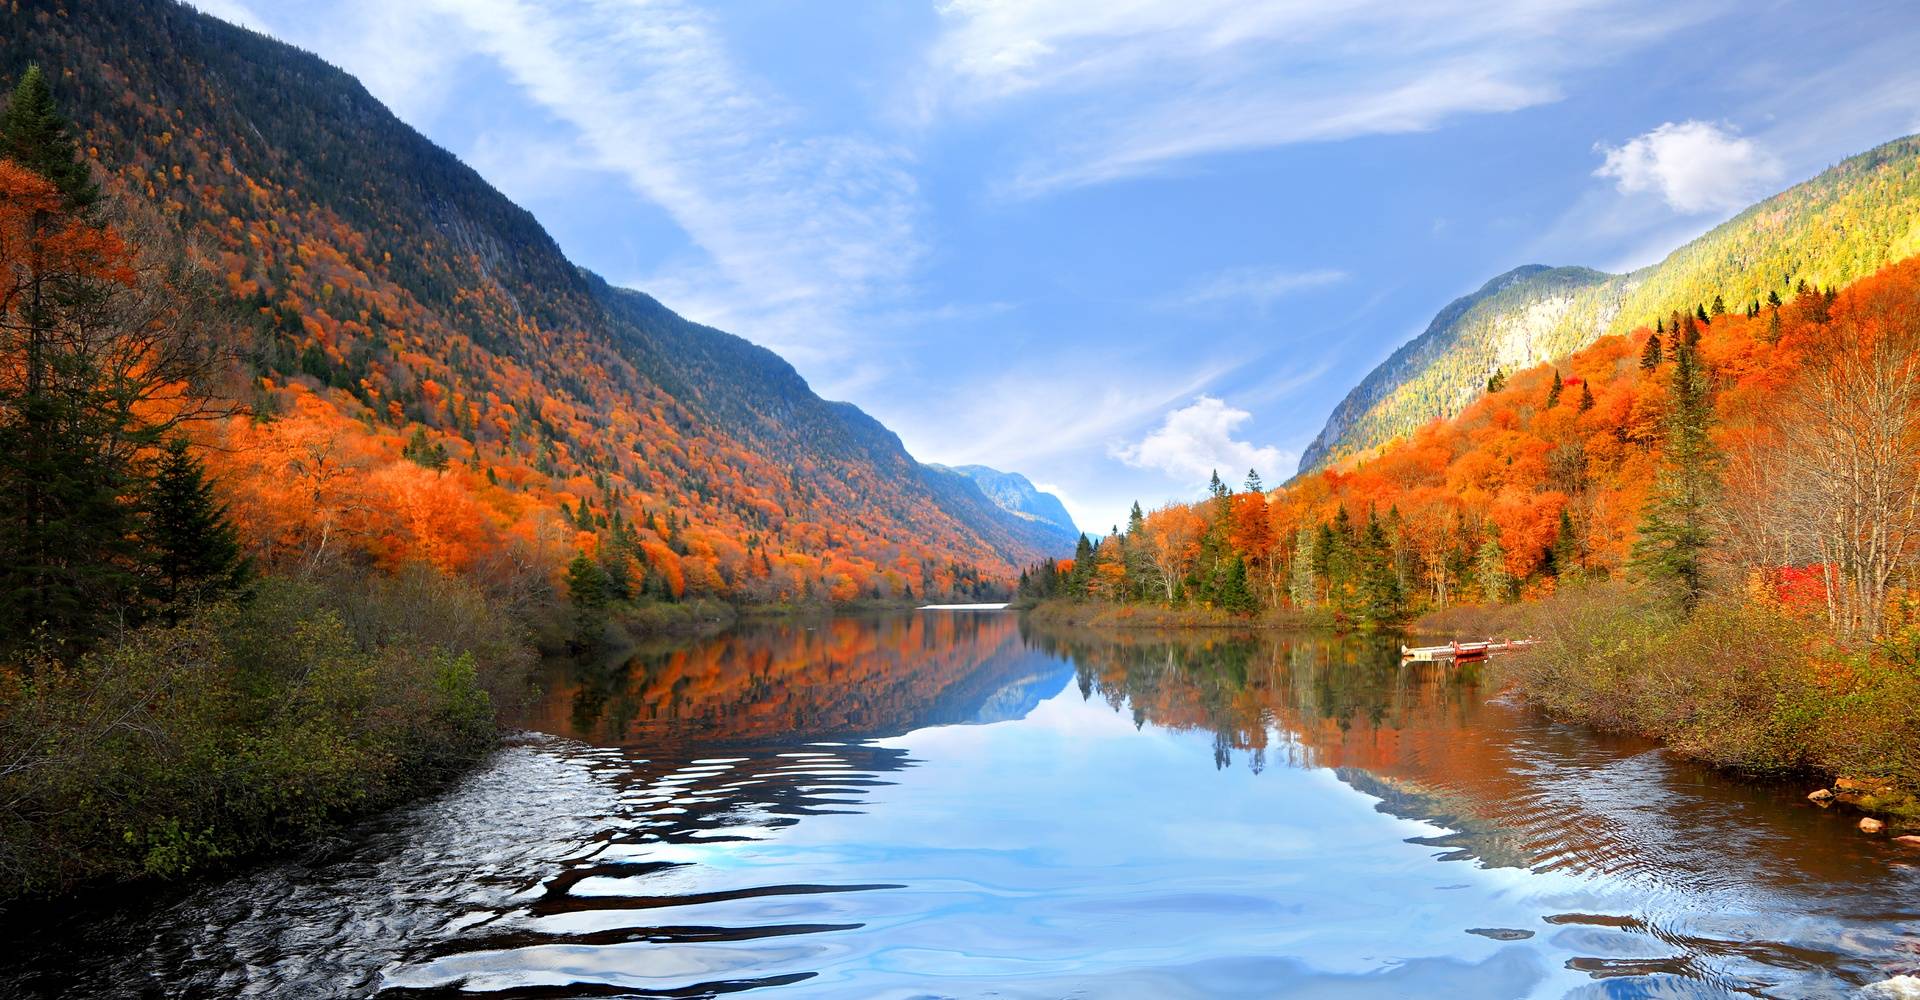 Nybegynder Kenya klint Quebec Fall Foliage Tour | French Canada Nature Travel